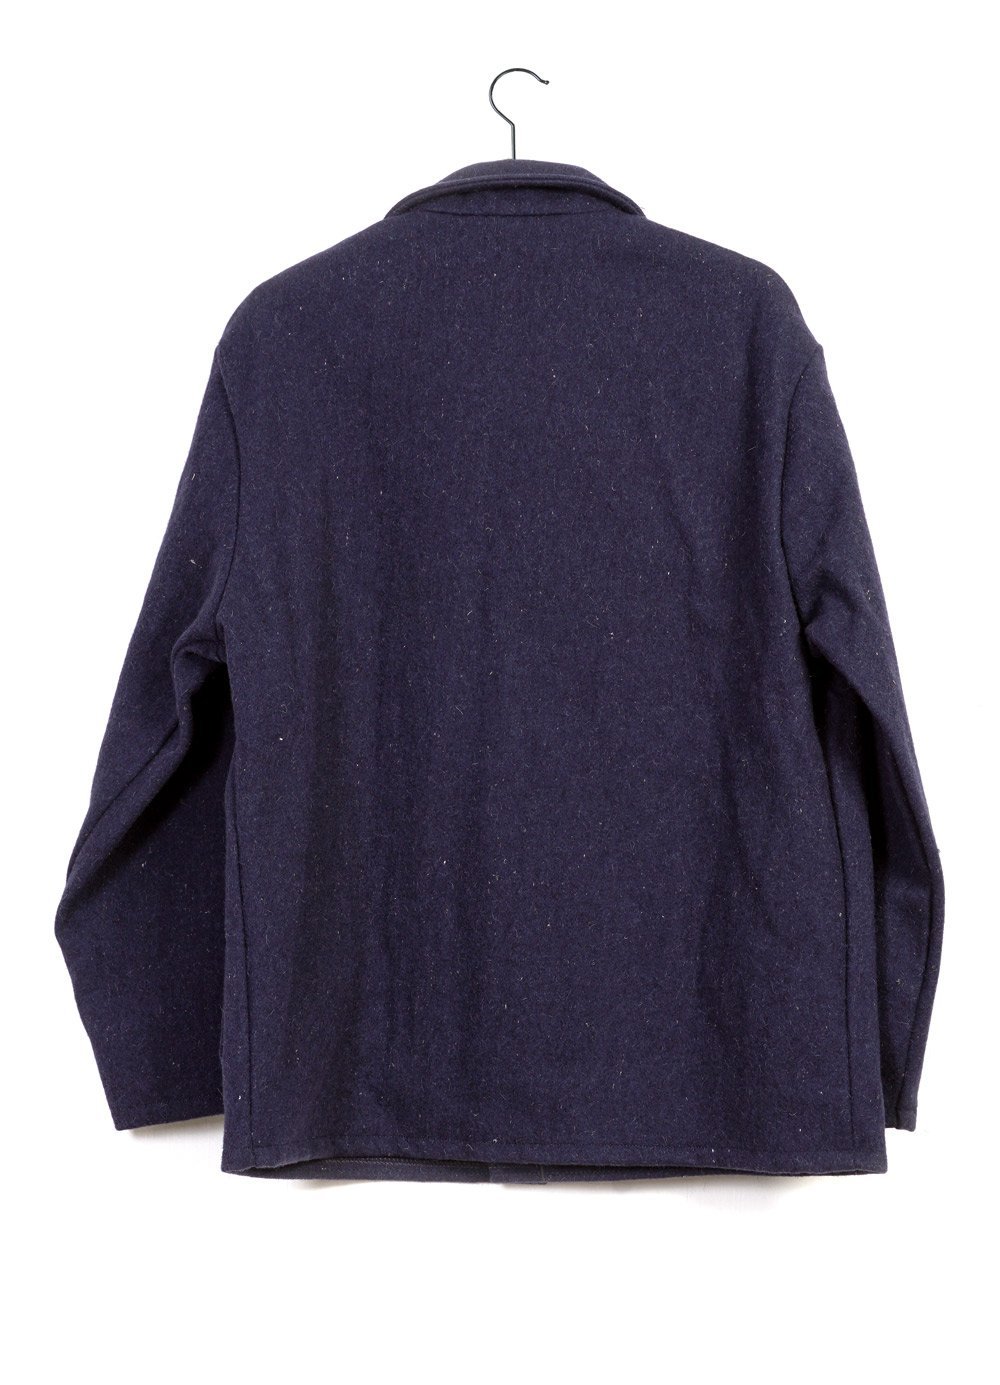 WORK JACKET | Wool | Blue | €225 -LE LABOUREUR- HANSEN Garments